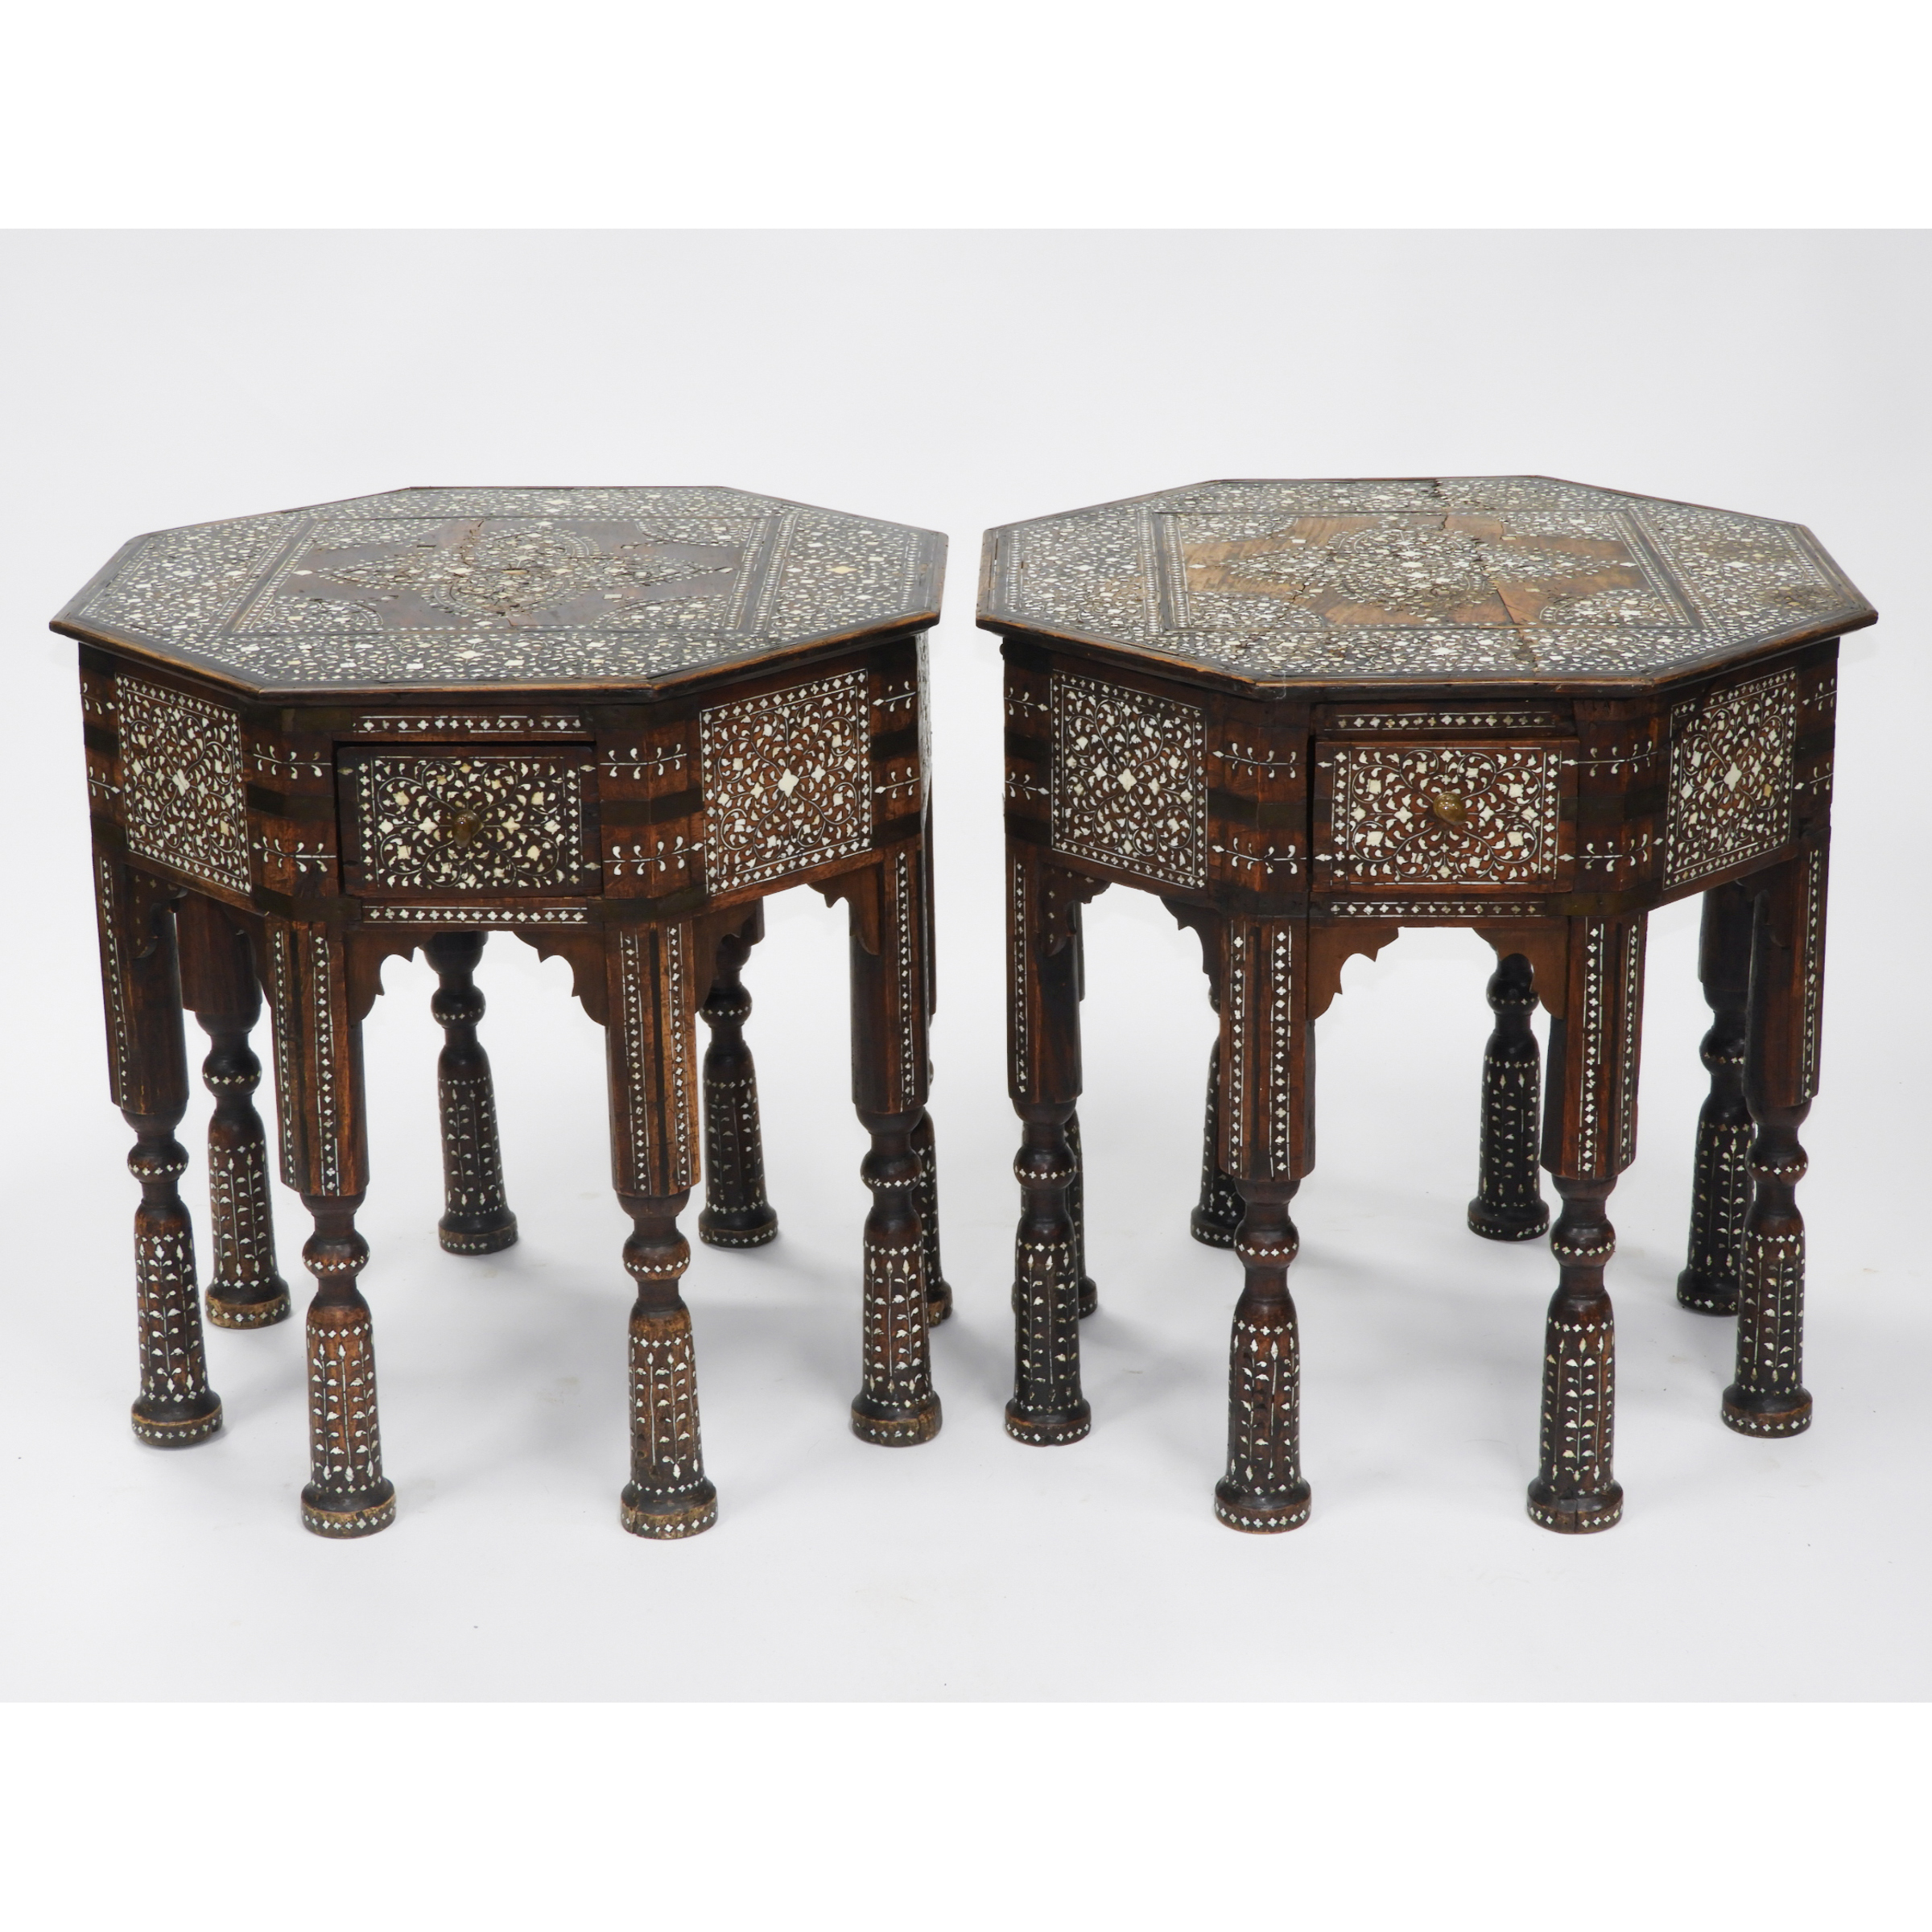 Pair of Turkish Ottoman Bone Inlaid Octagonal Side Tables, 19th cetnury